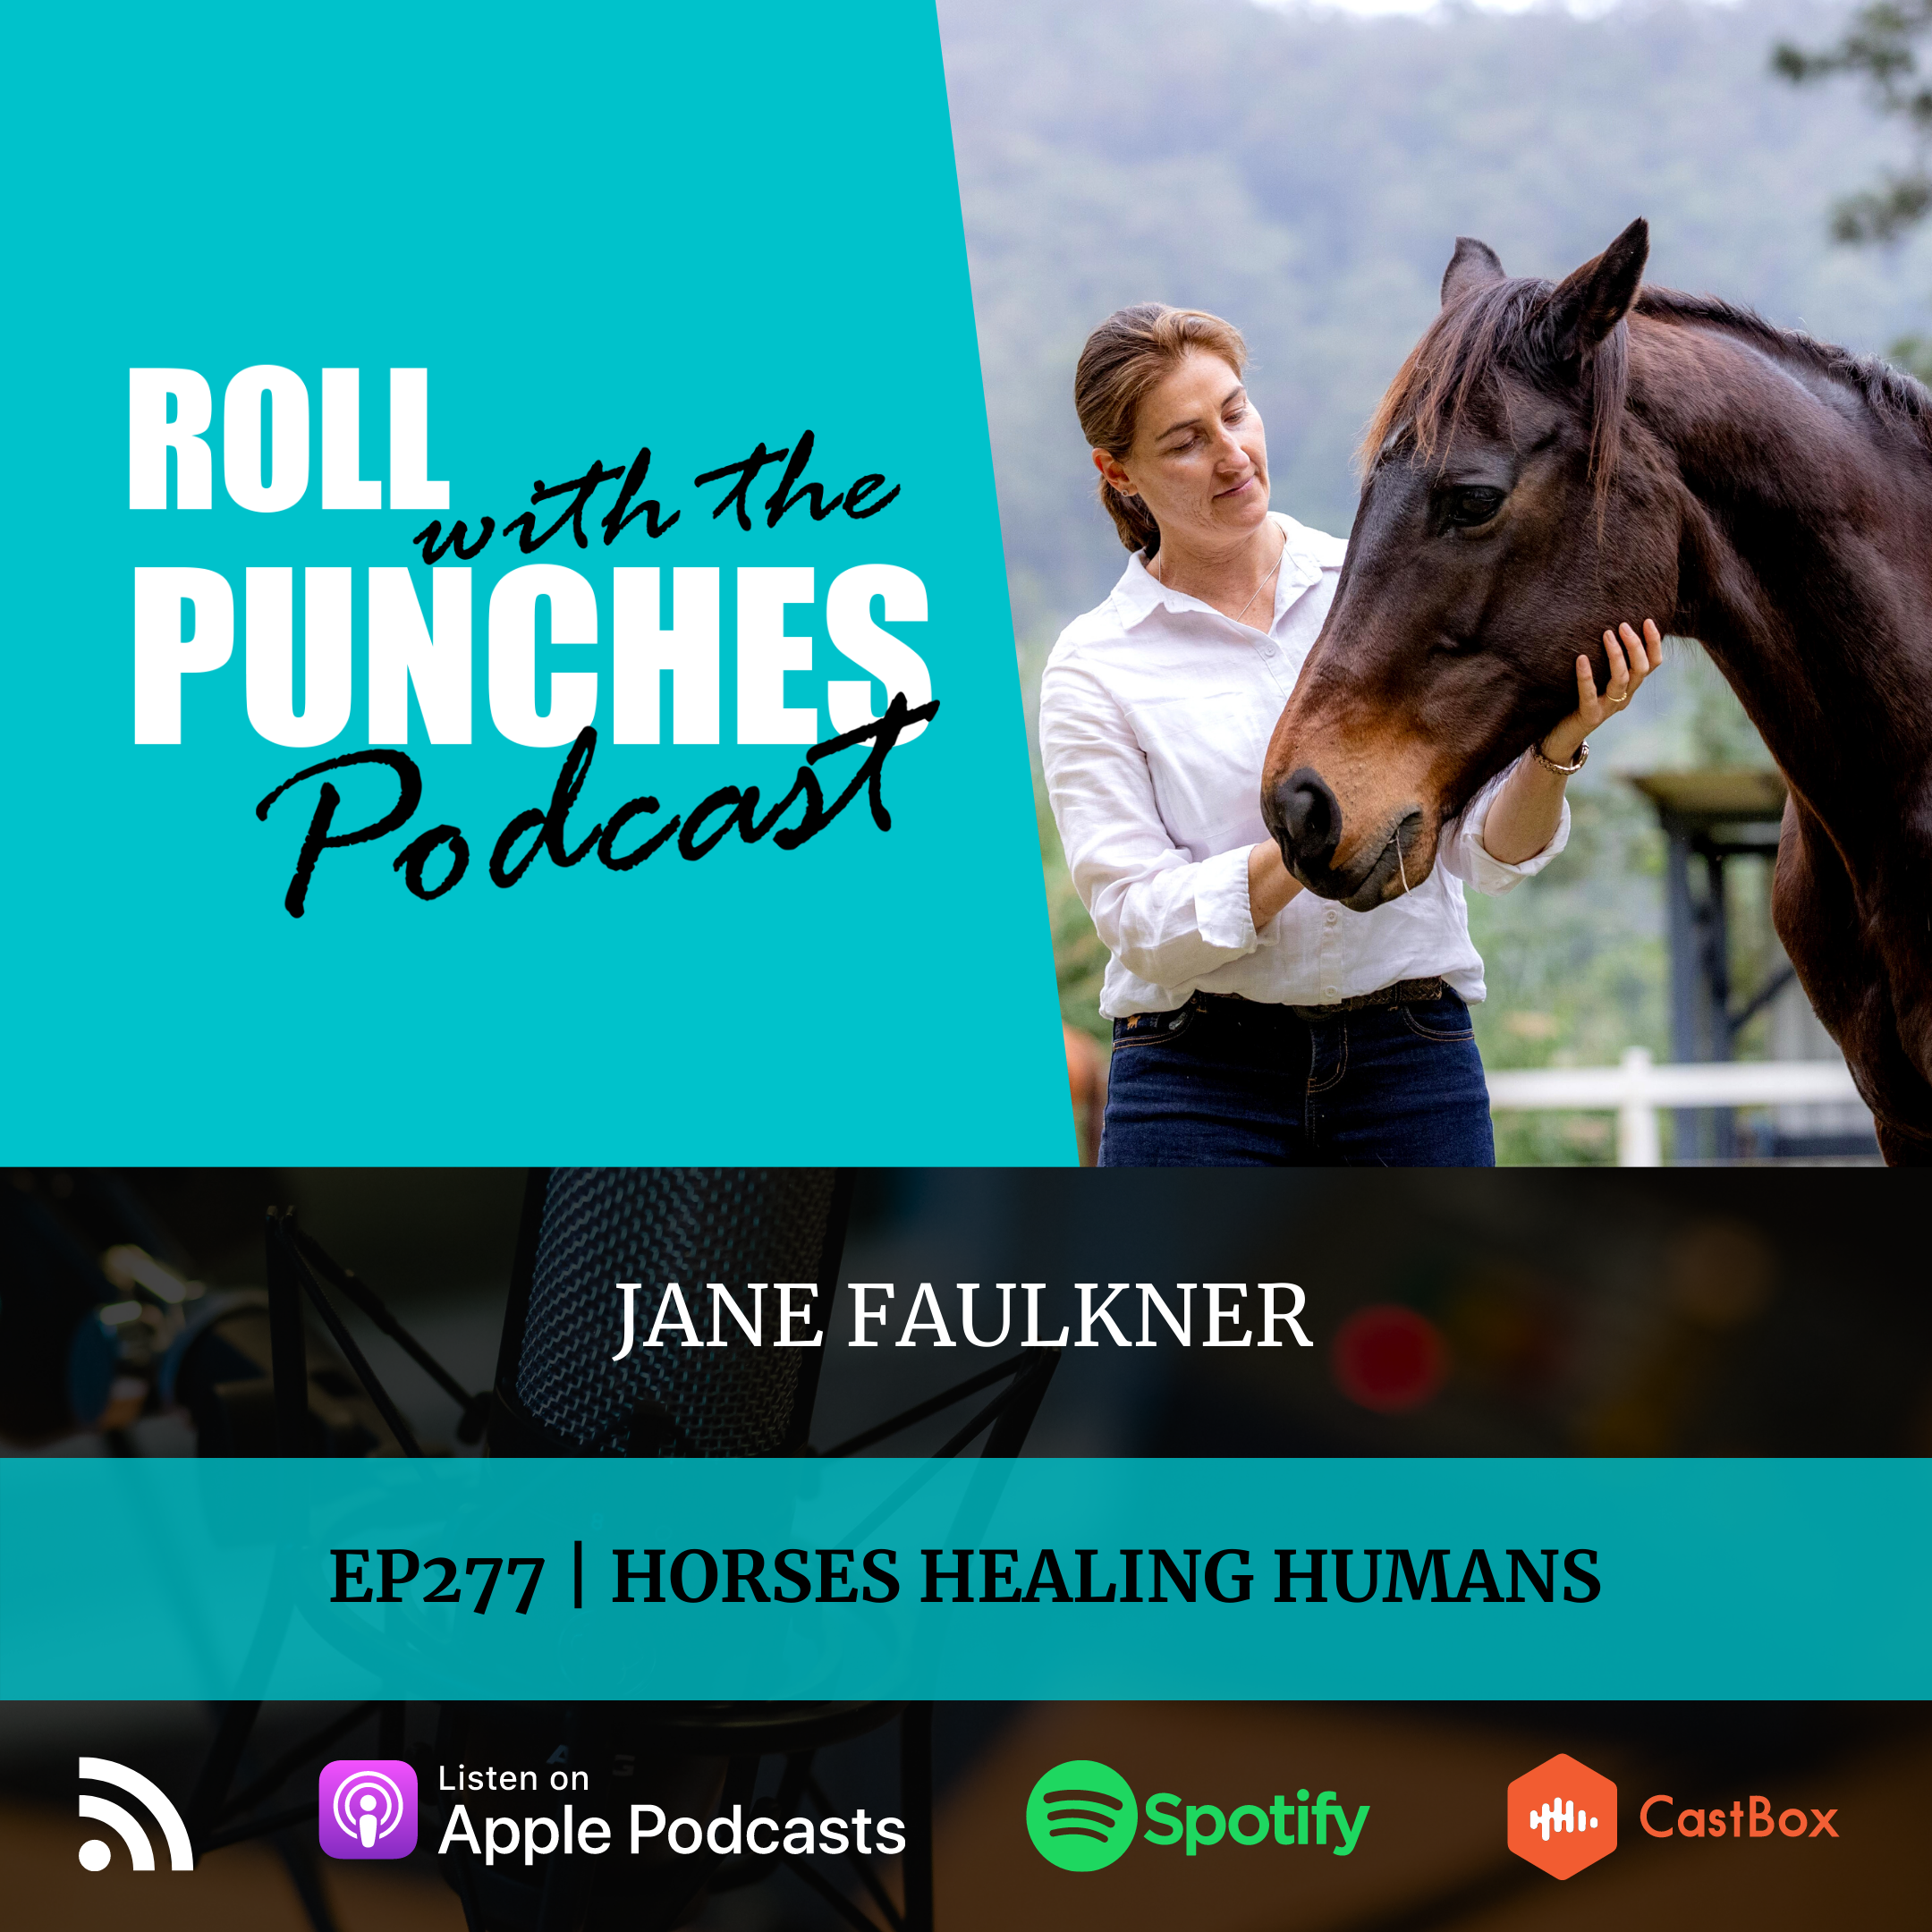 EP277 Horses Healing Humans | Jane Faulkner